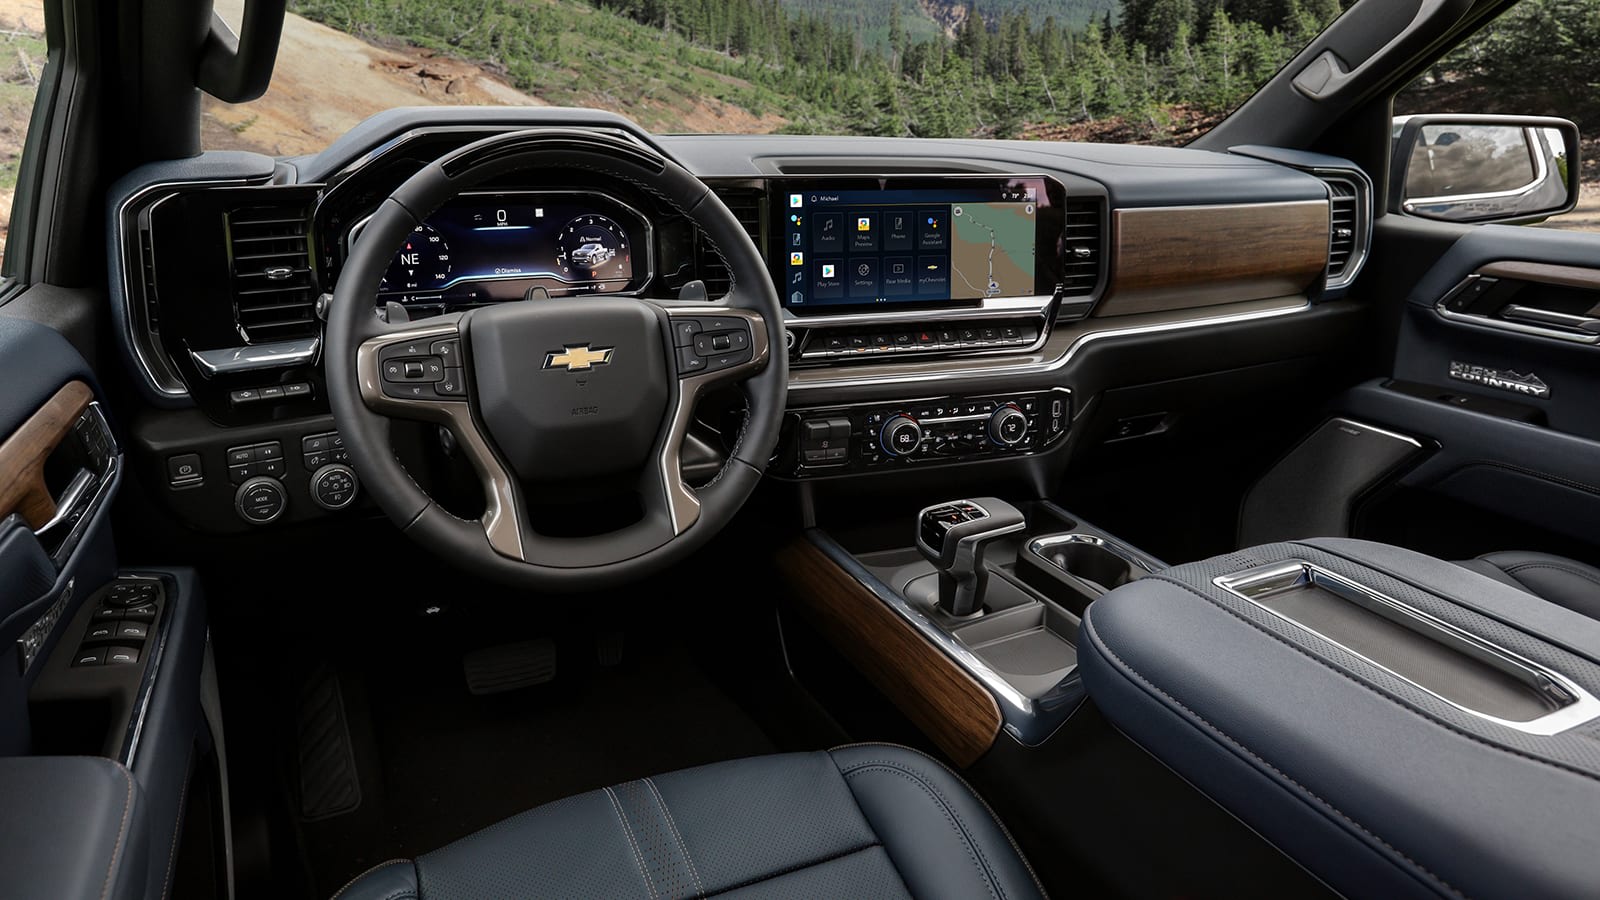 Advertisement Tighten auction Here's the new 2022 Chevy Silverado interior. It's so much better - Autoblog